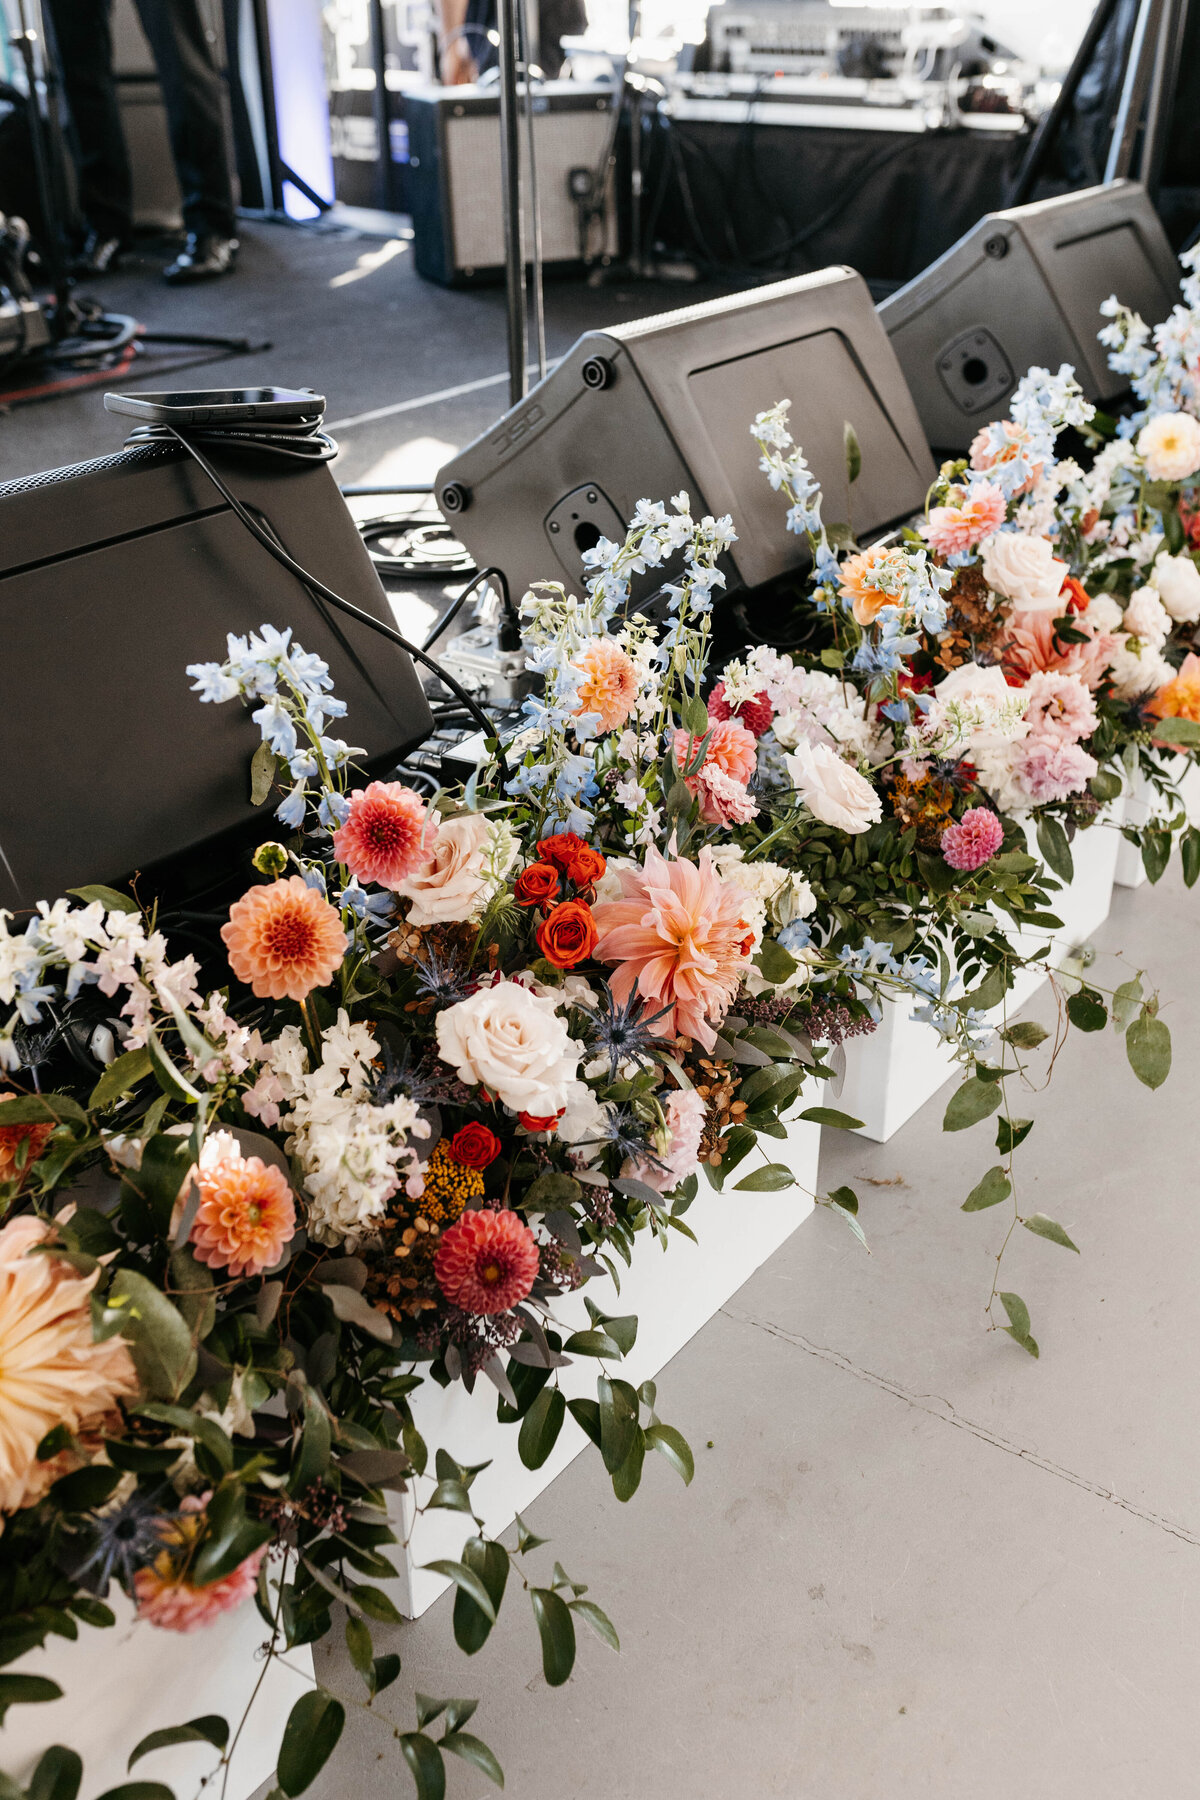 Wedding flowers on stage